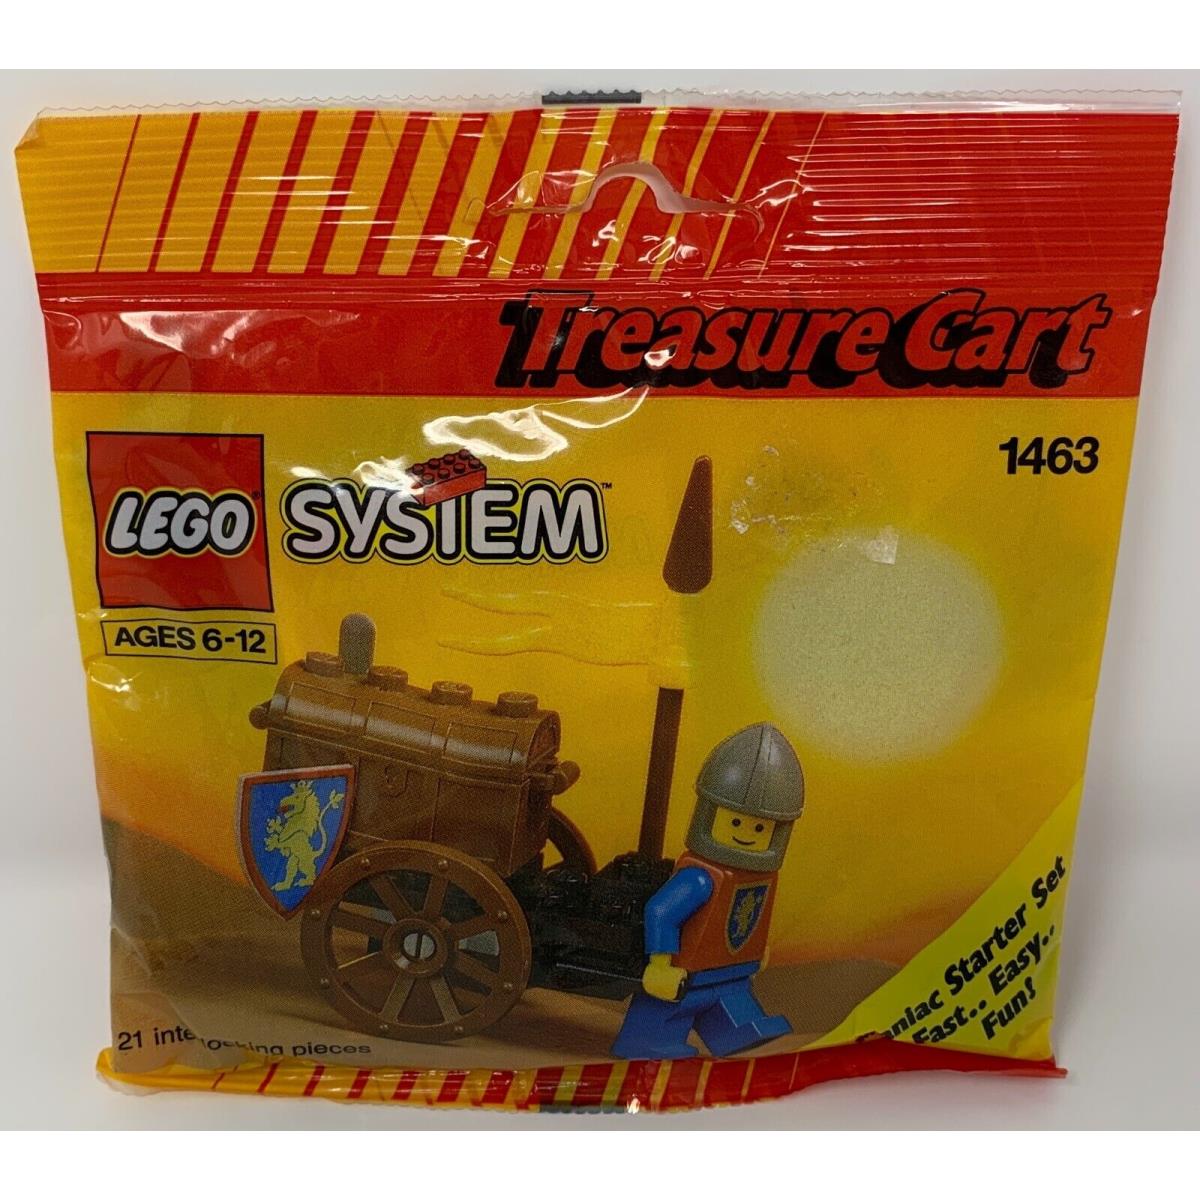 Lego 1463 Treasure Cart 1992